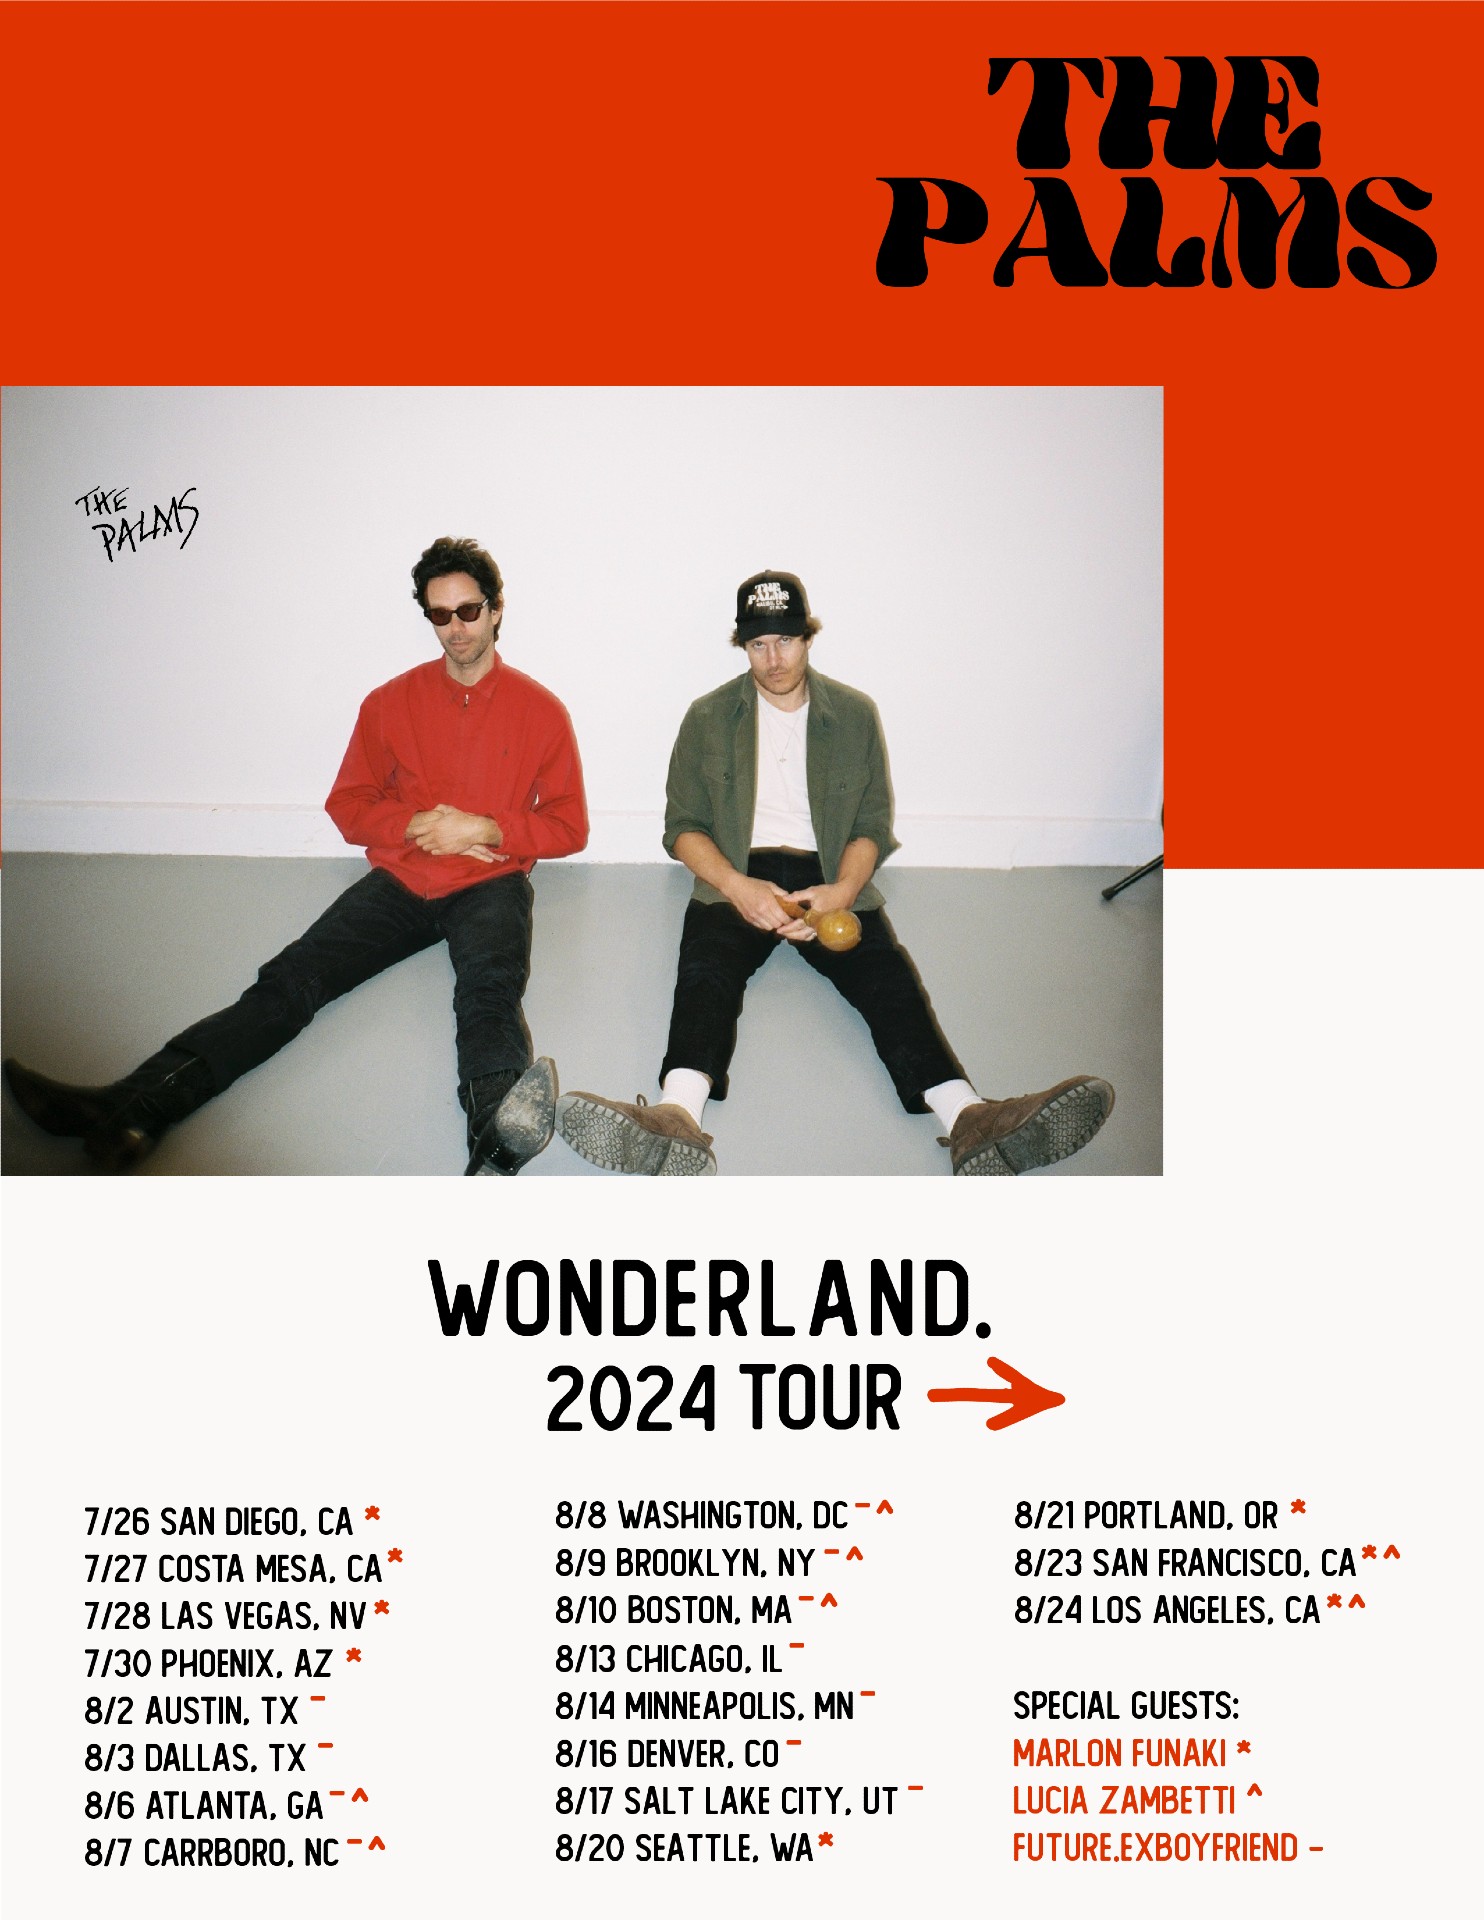 The Palms “Wonderland Tour” admat